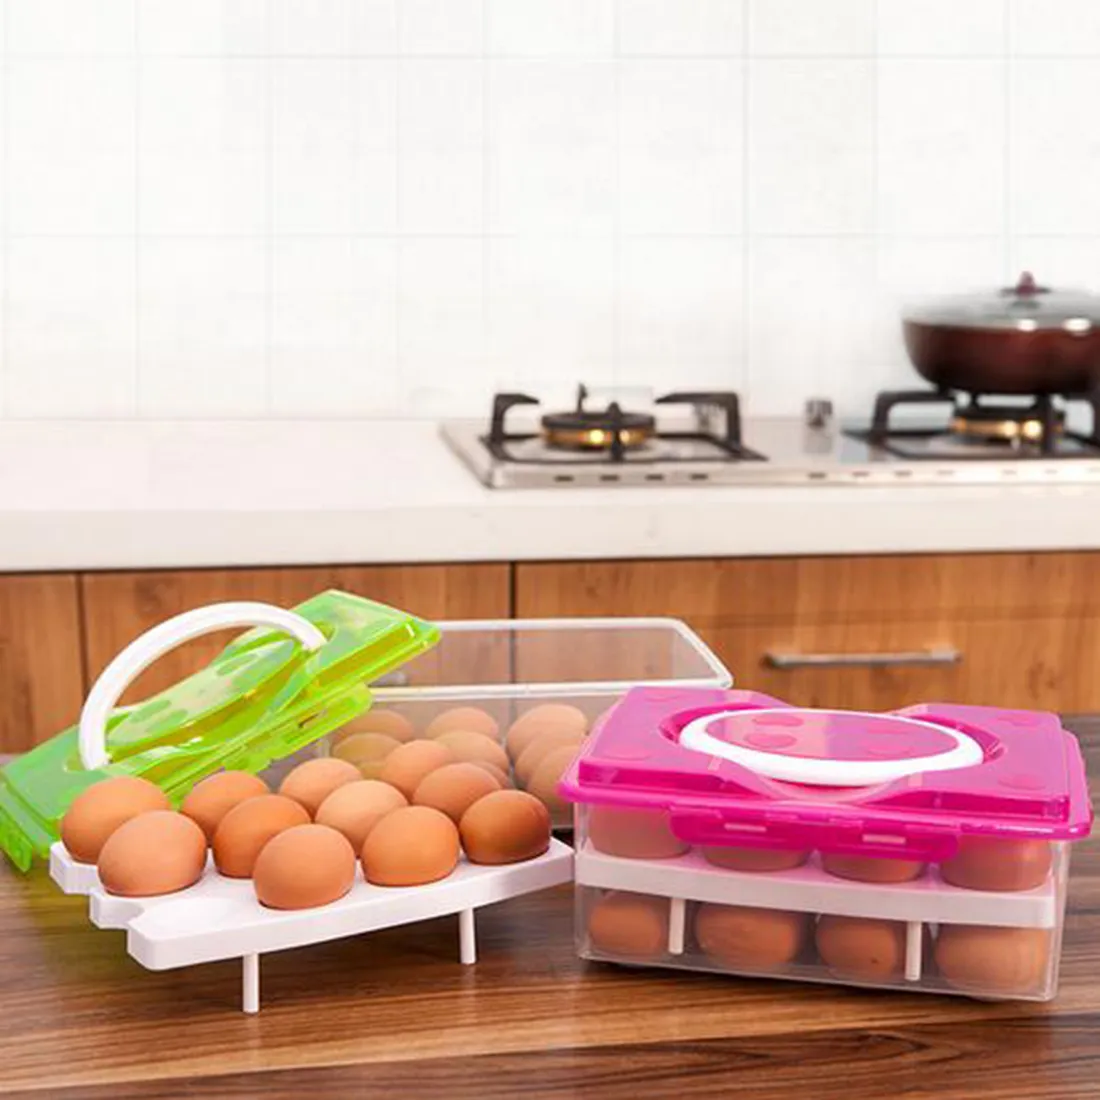 24 grade Caixa de ovos de comida Organizador de recipientes convenientes Caixas de armazenamento de dupla camada Durável multifuncional crisper produtos 210309